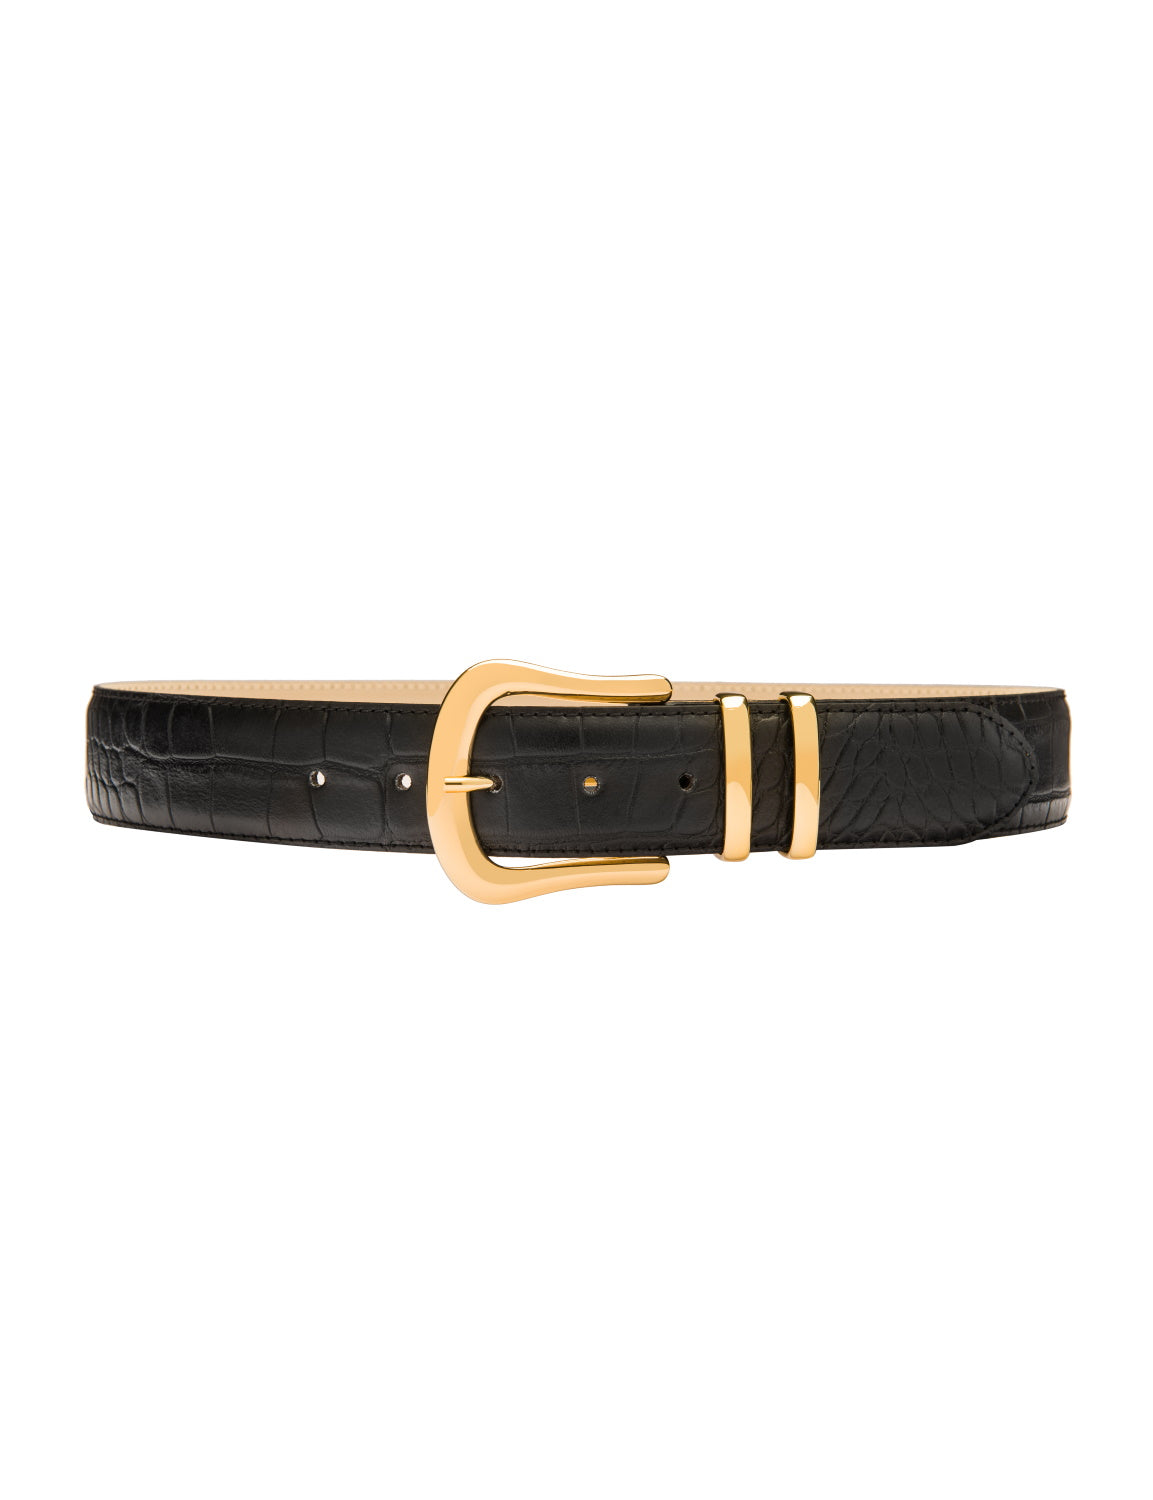 Marina black croc leather waist belt